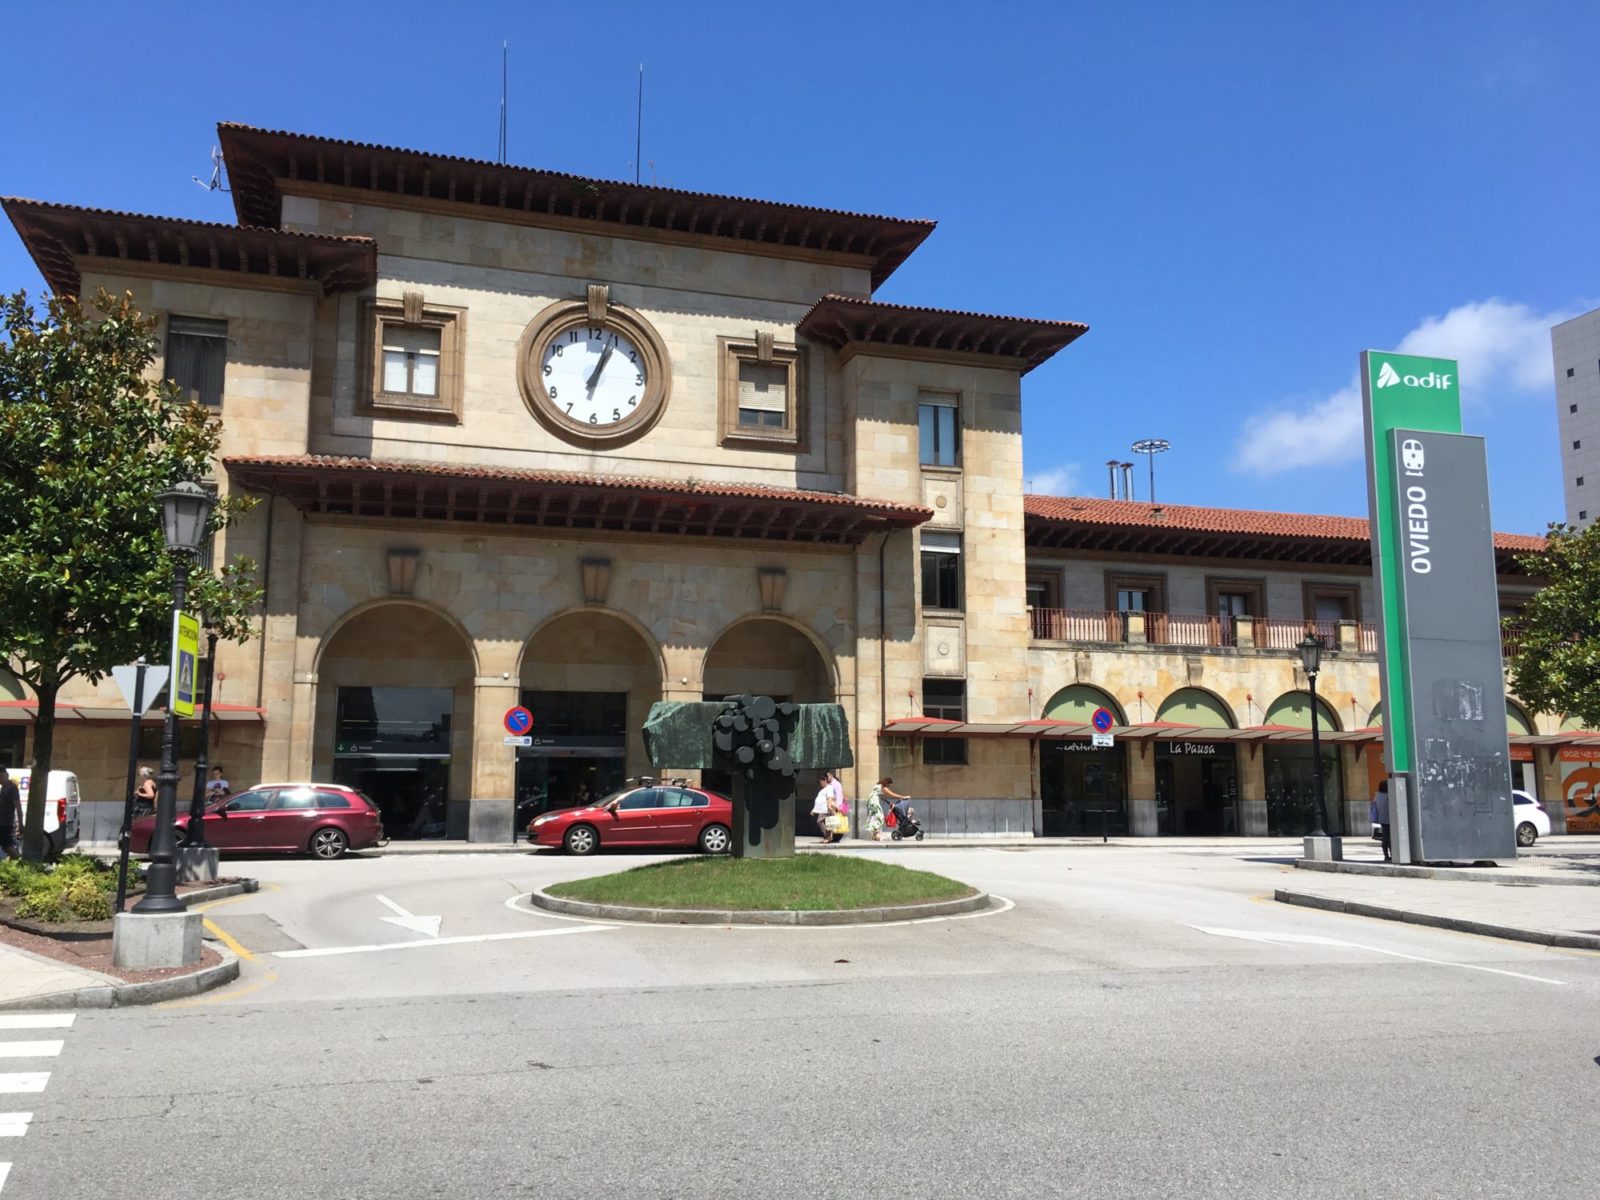 Oviedo train station